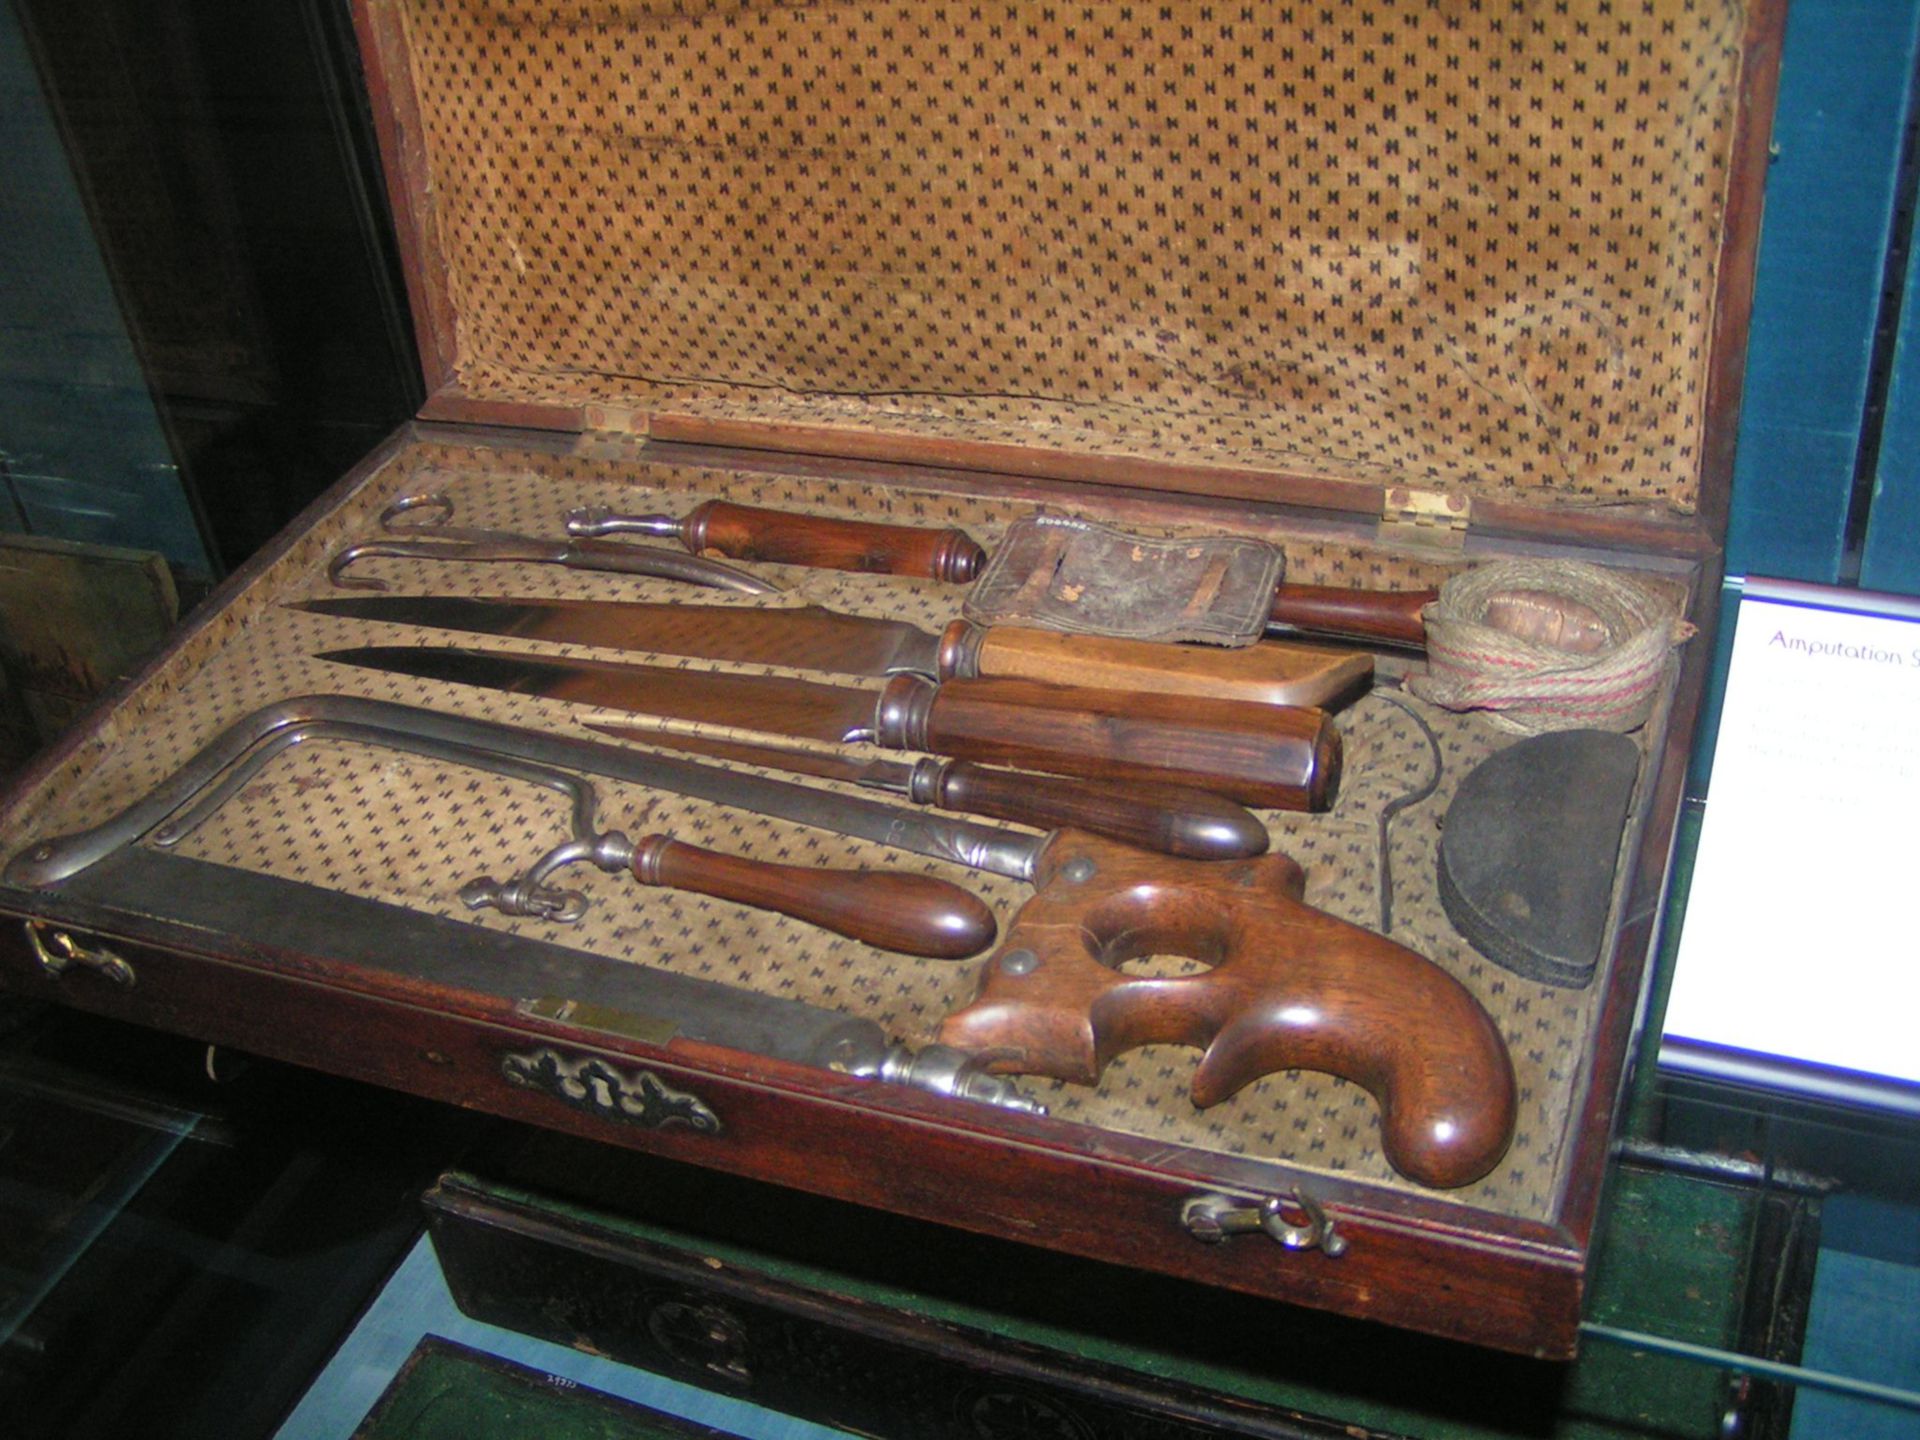 Tools used for amputation